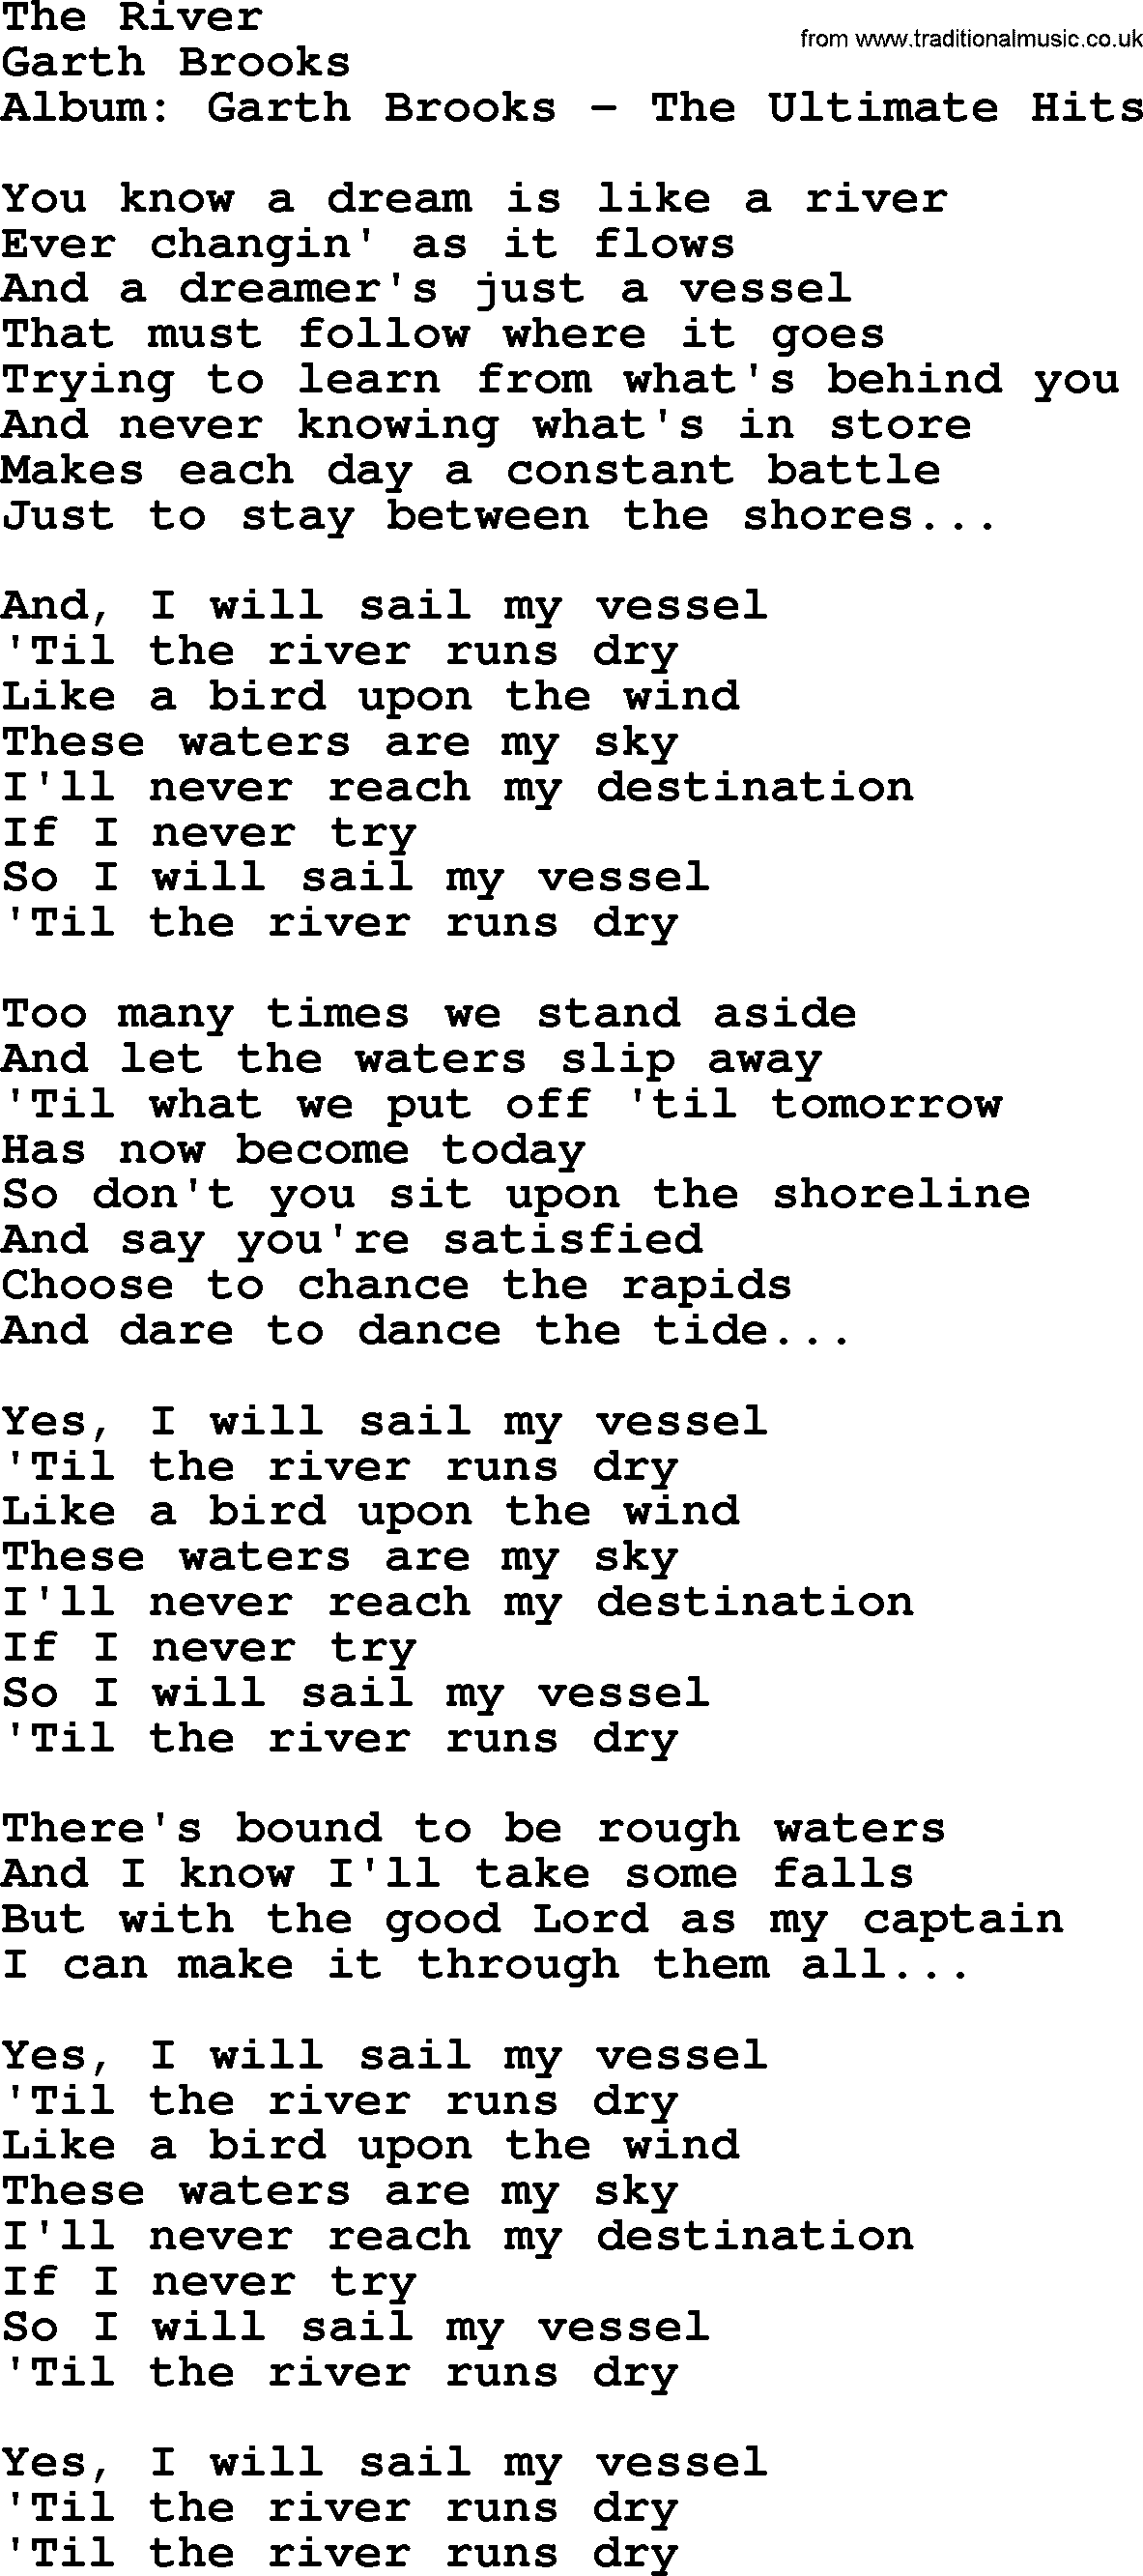 Garth Brooks song: The River, lyrics